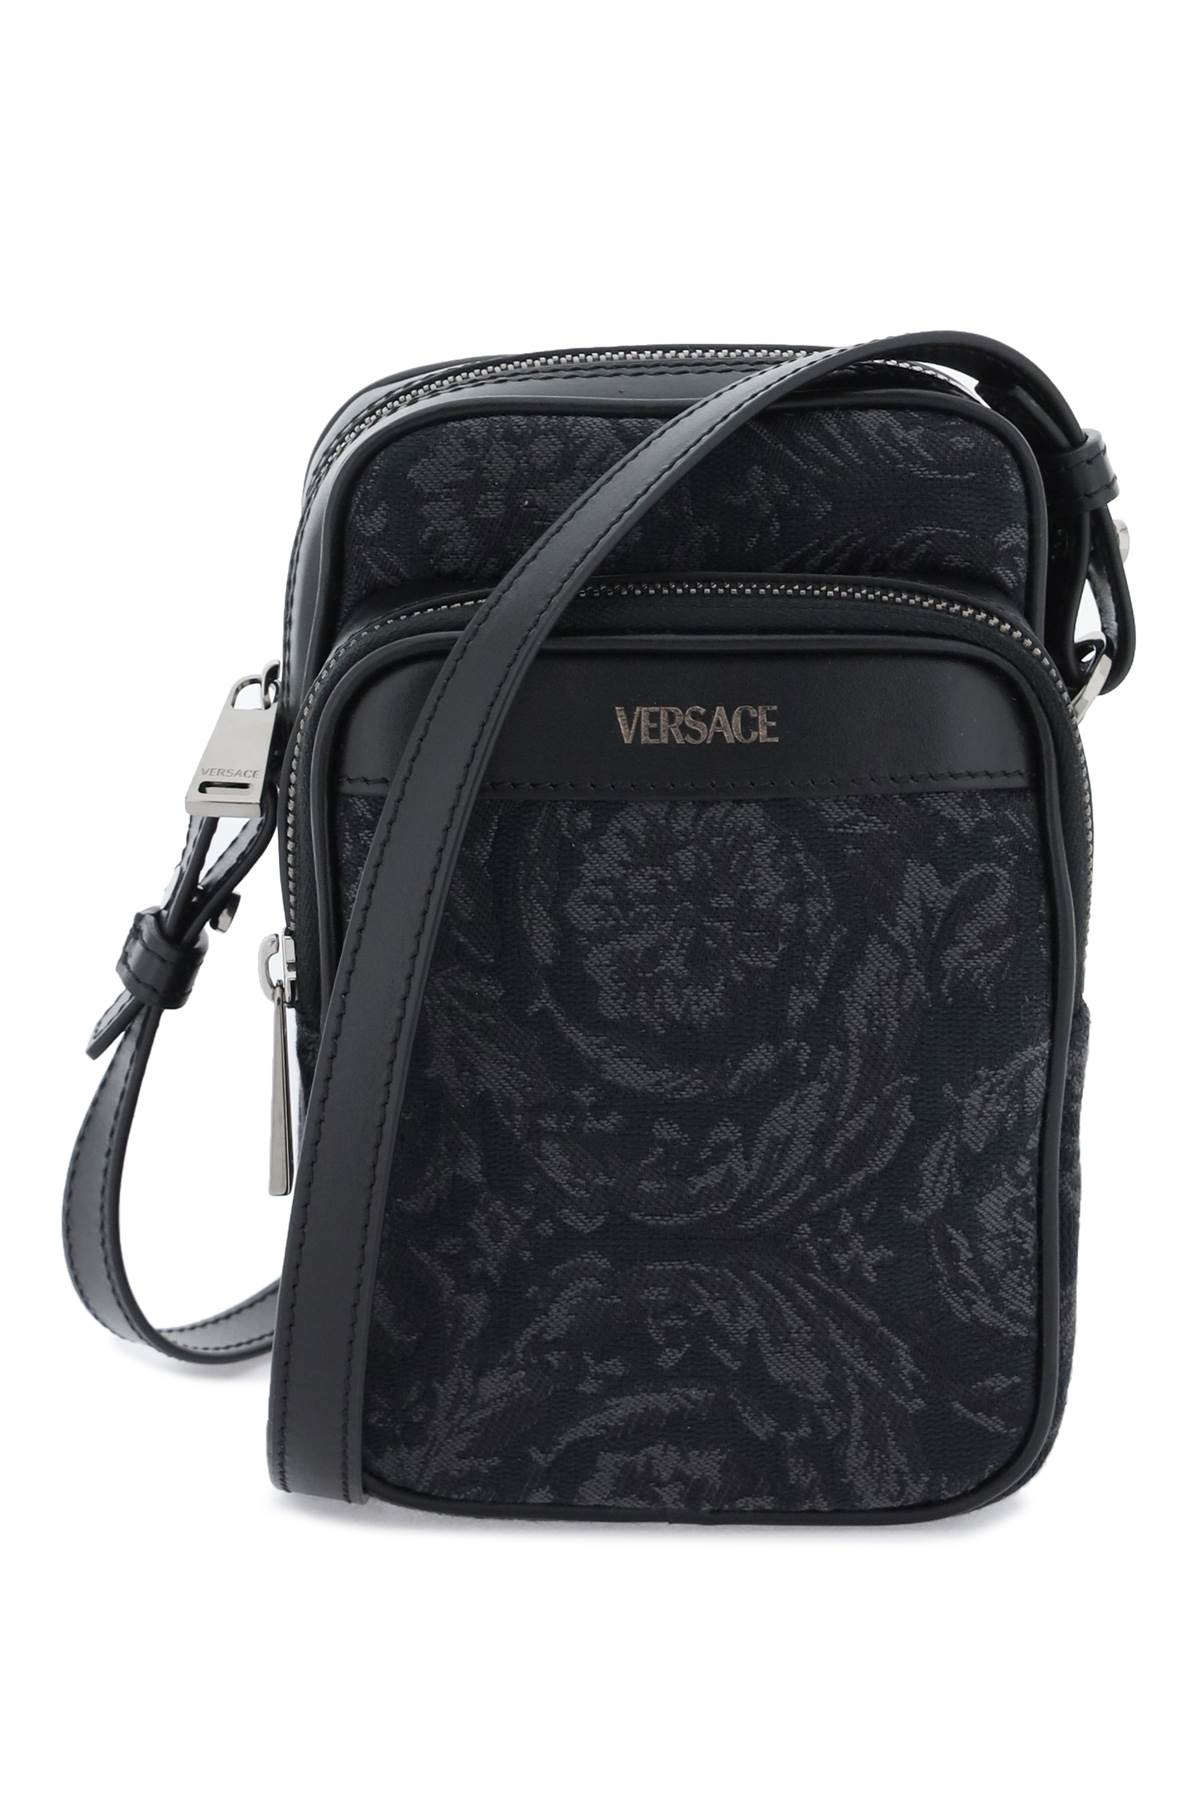 Versace Athena Crossbody Bag